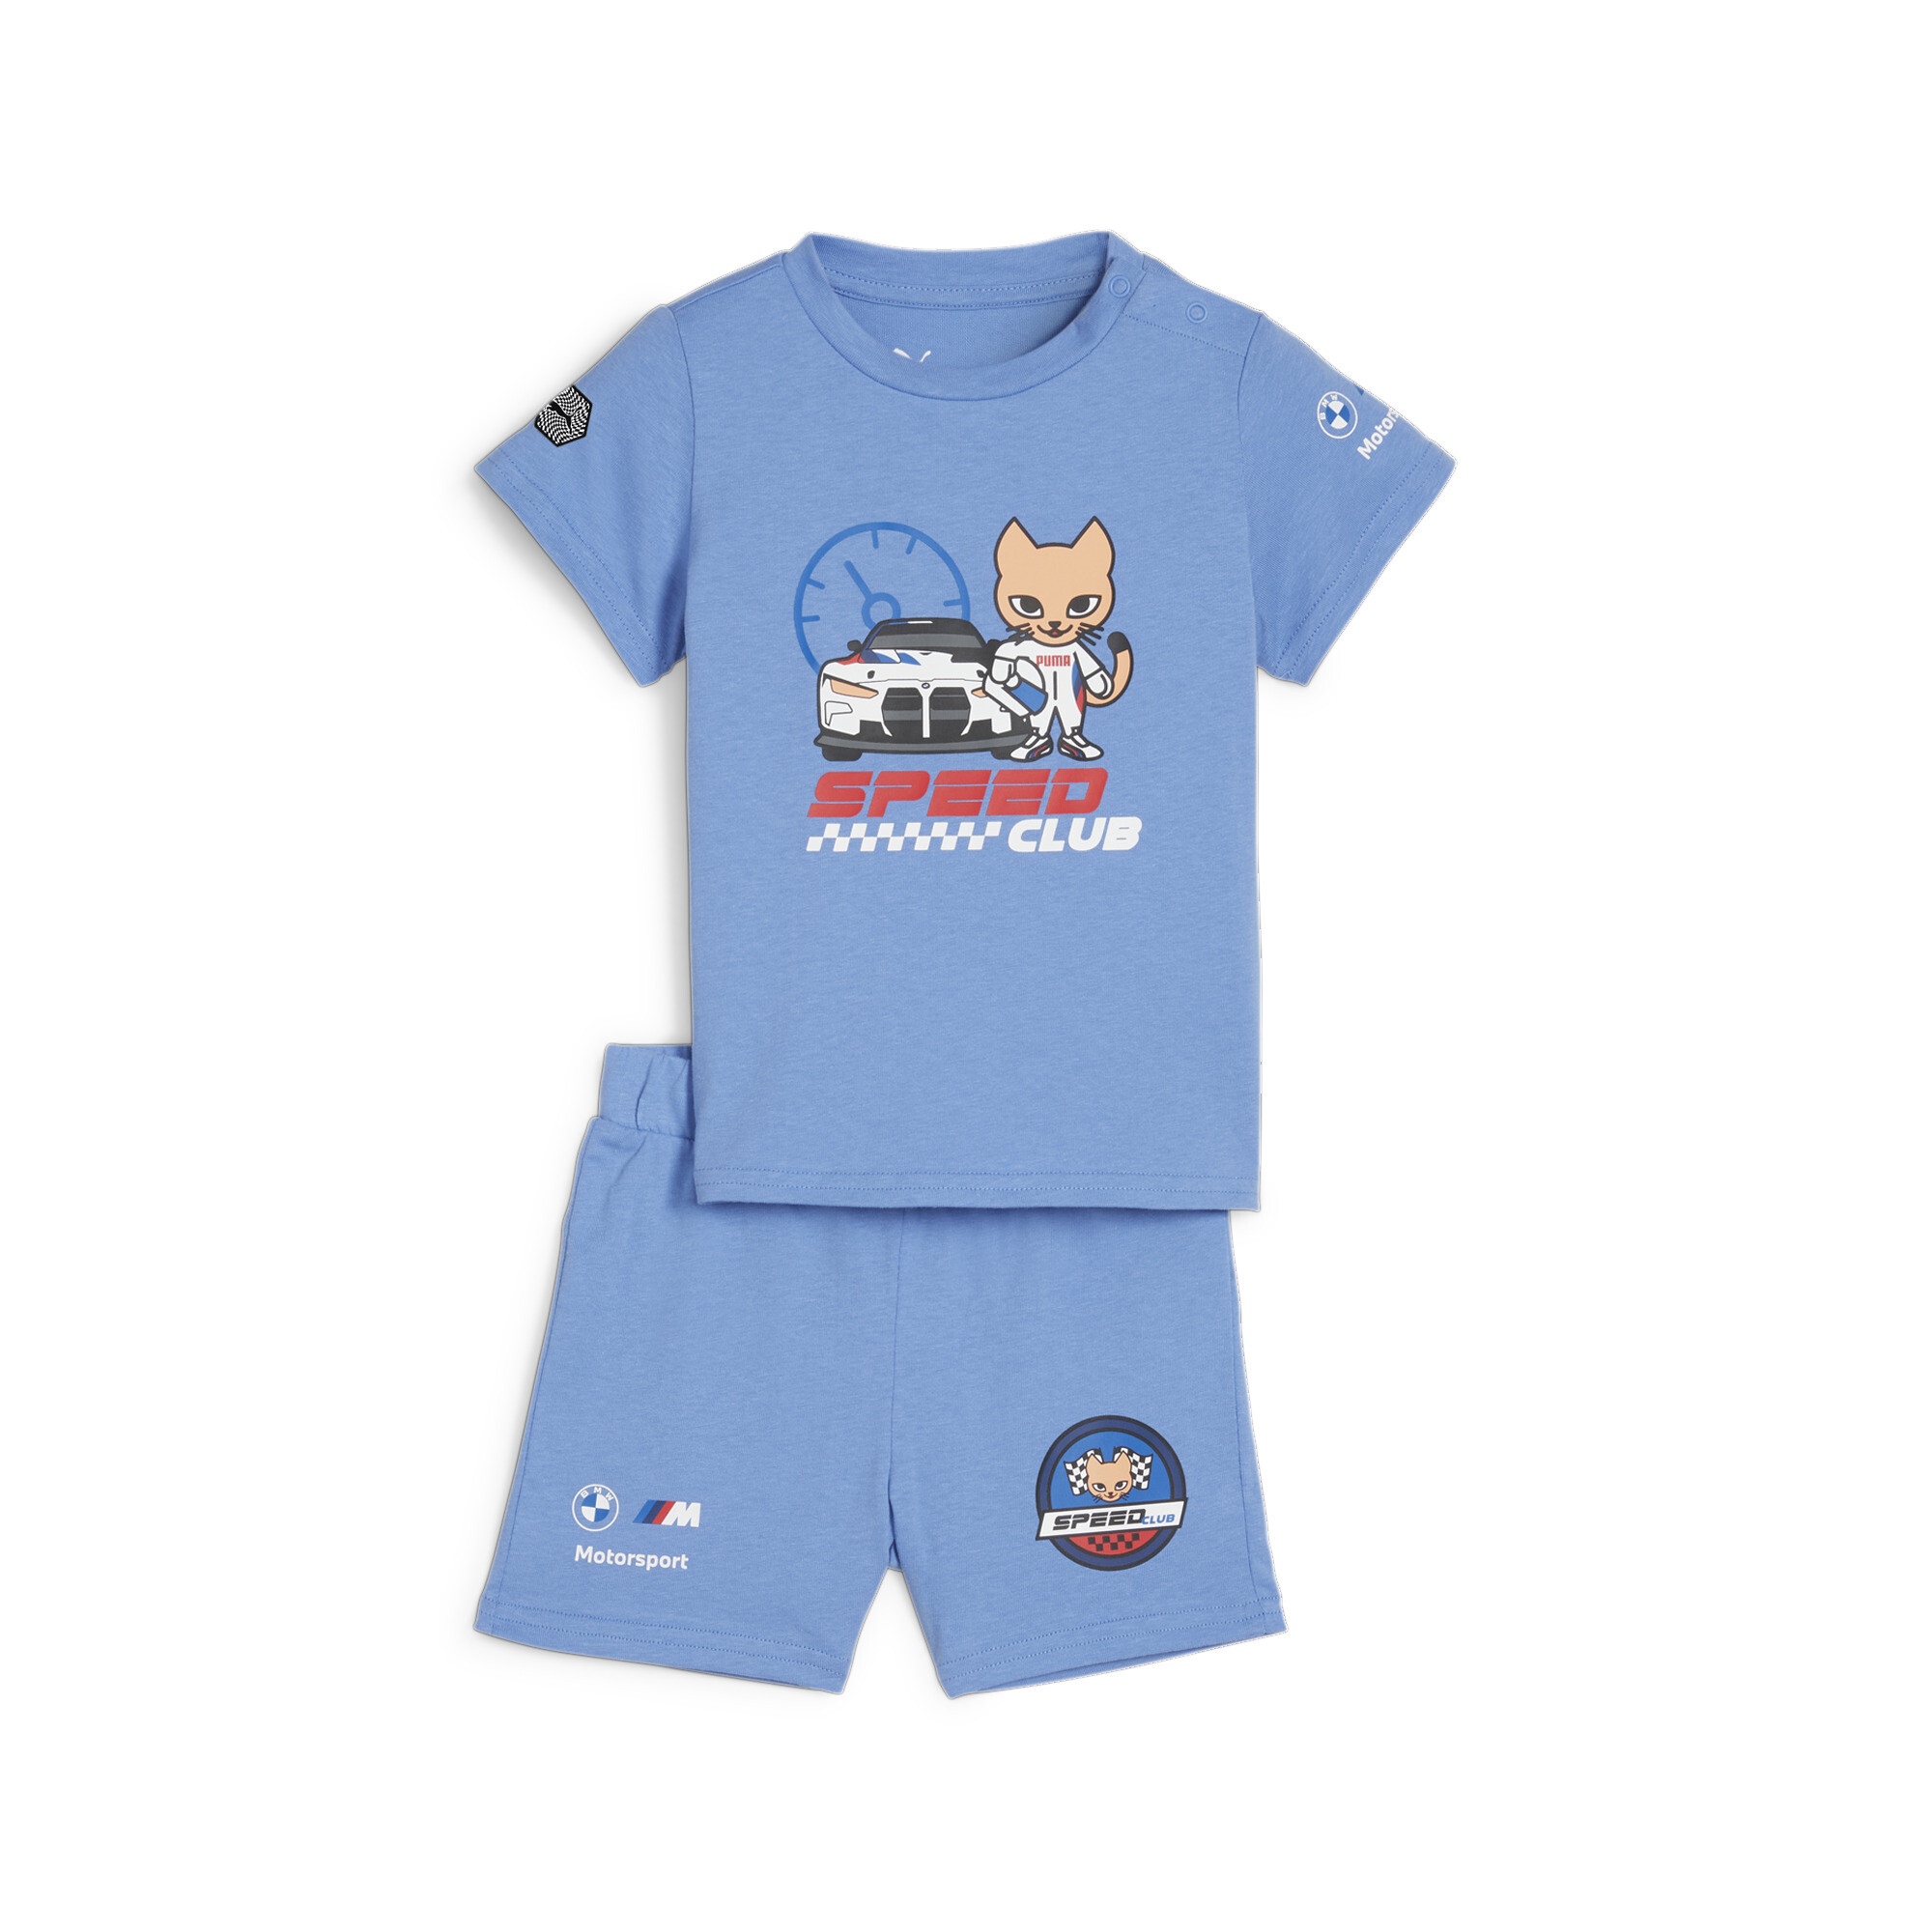 Puma BMW M Motorsport Toddlers' Set, Blue, Size 0-1M, Clothing